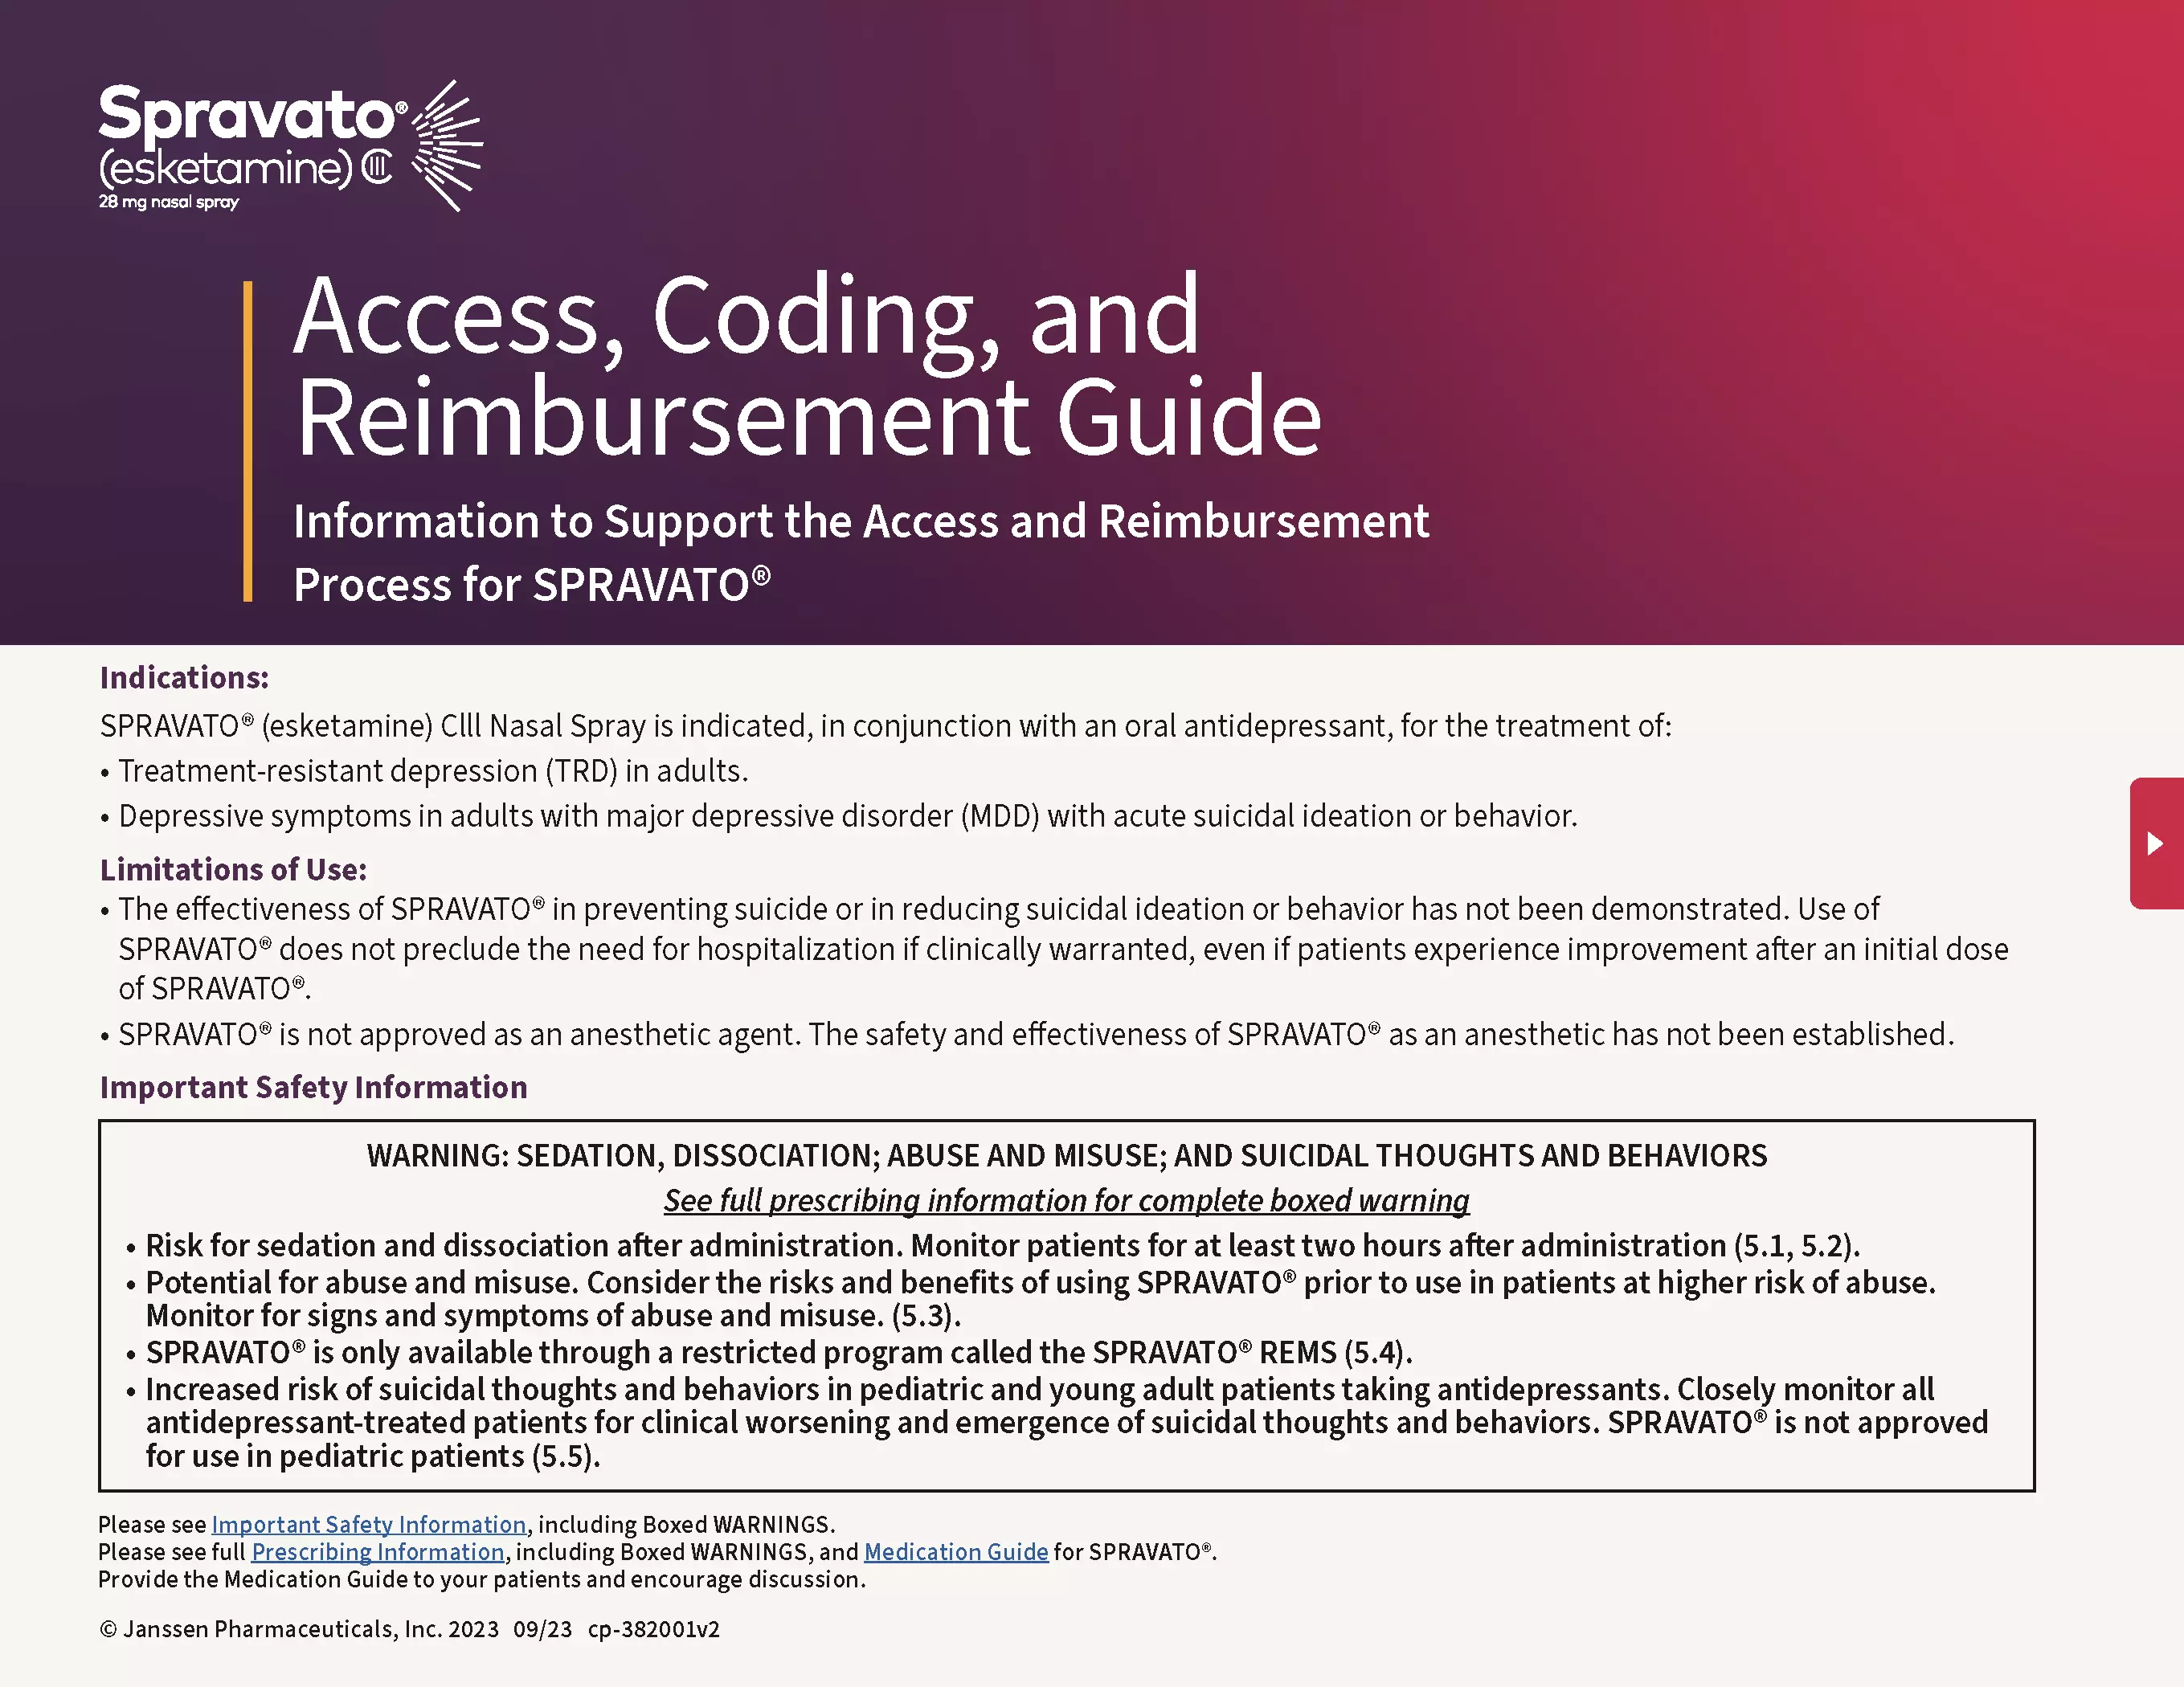 SPRAVATO® Access, Coding, and Reimbursement Guide PDF